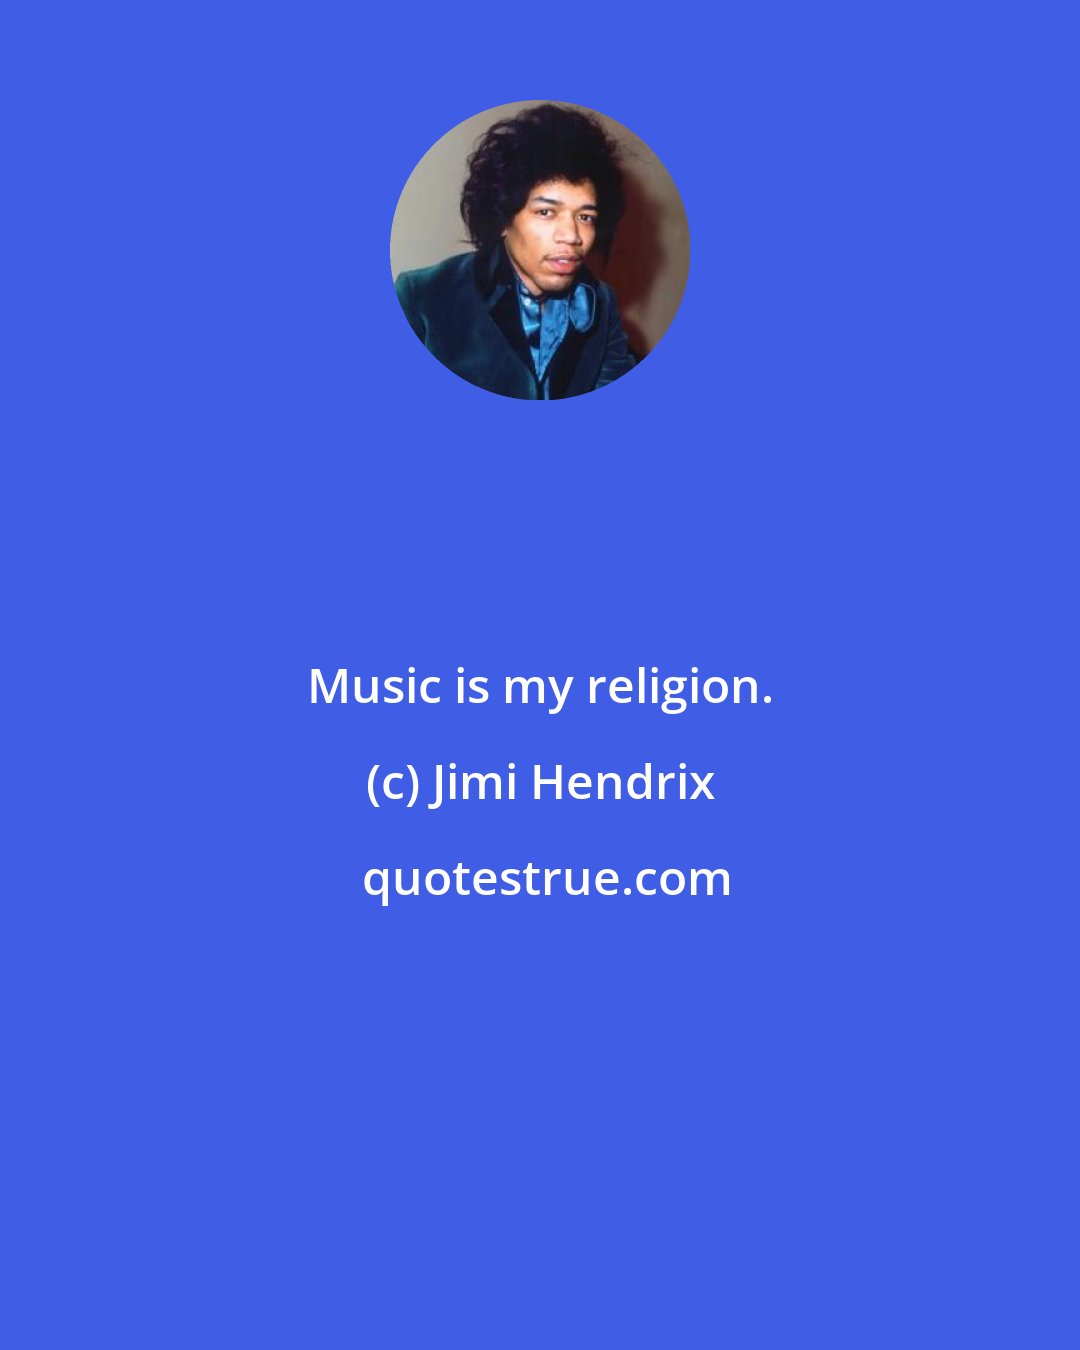 Jimi Hendrix: Music is my religion.